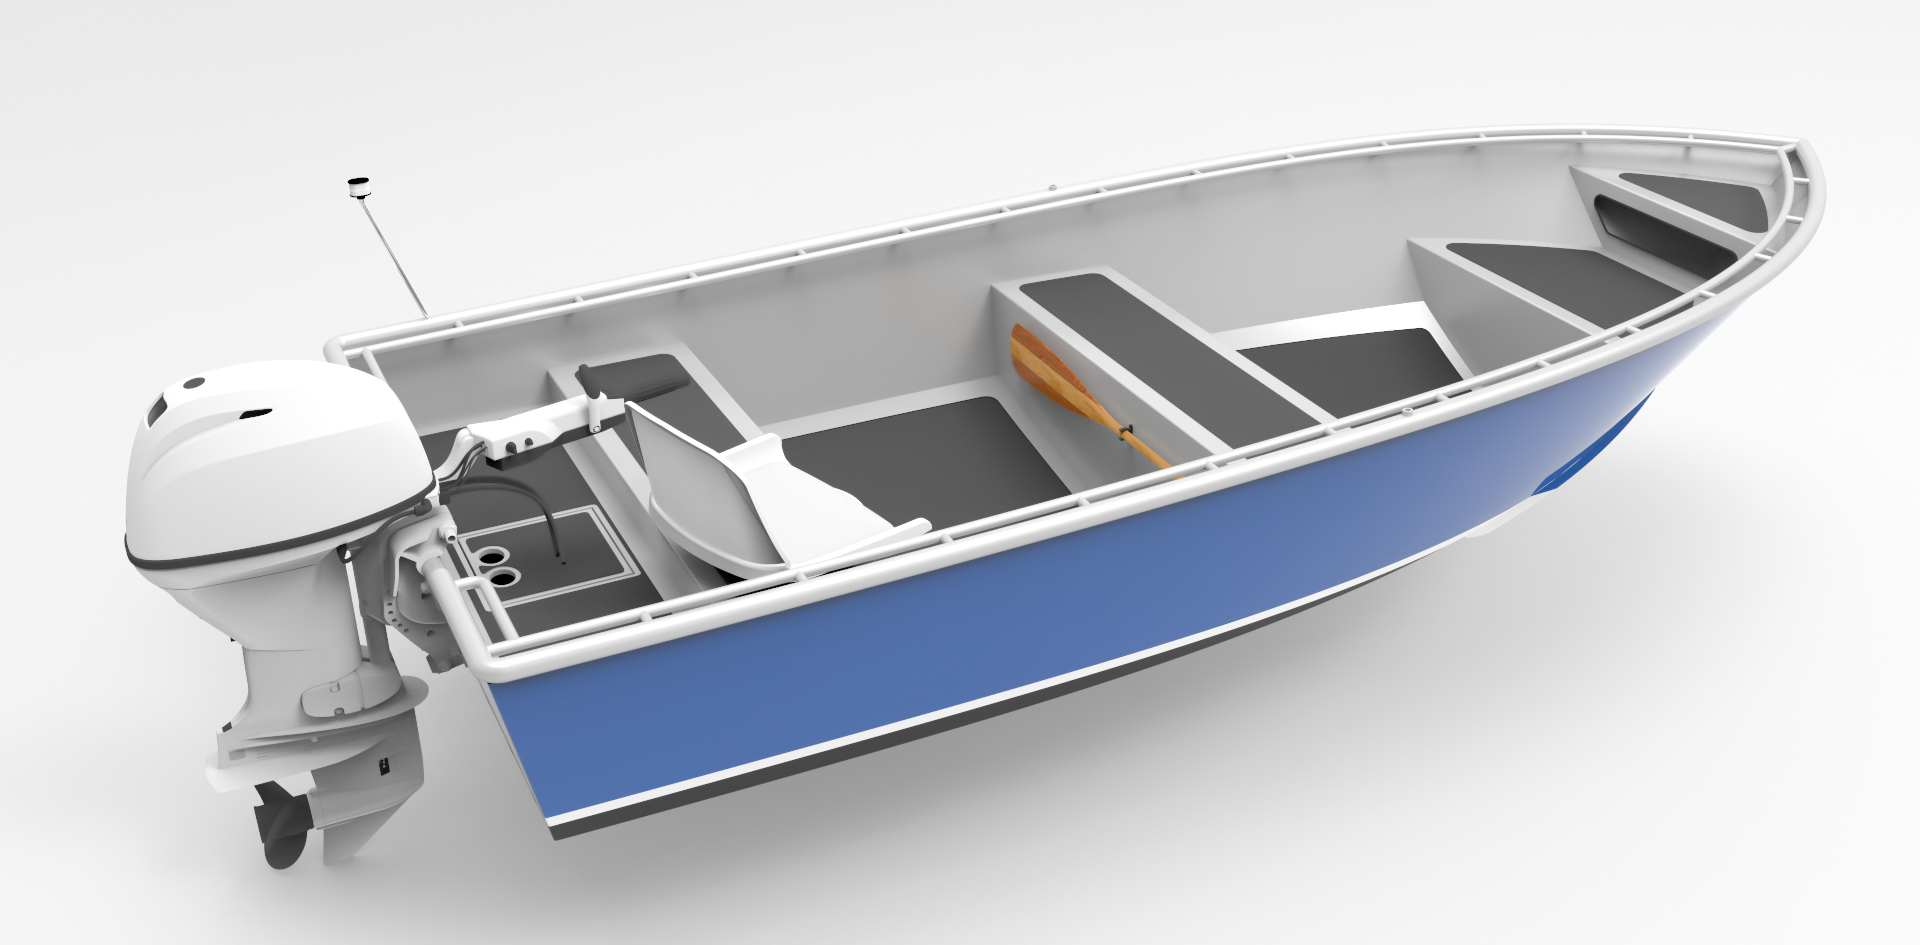 14 Foot (4m) Skiff - Utility - Metal Boat Kits